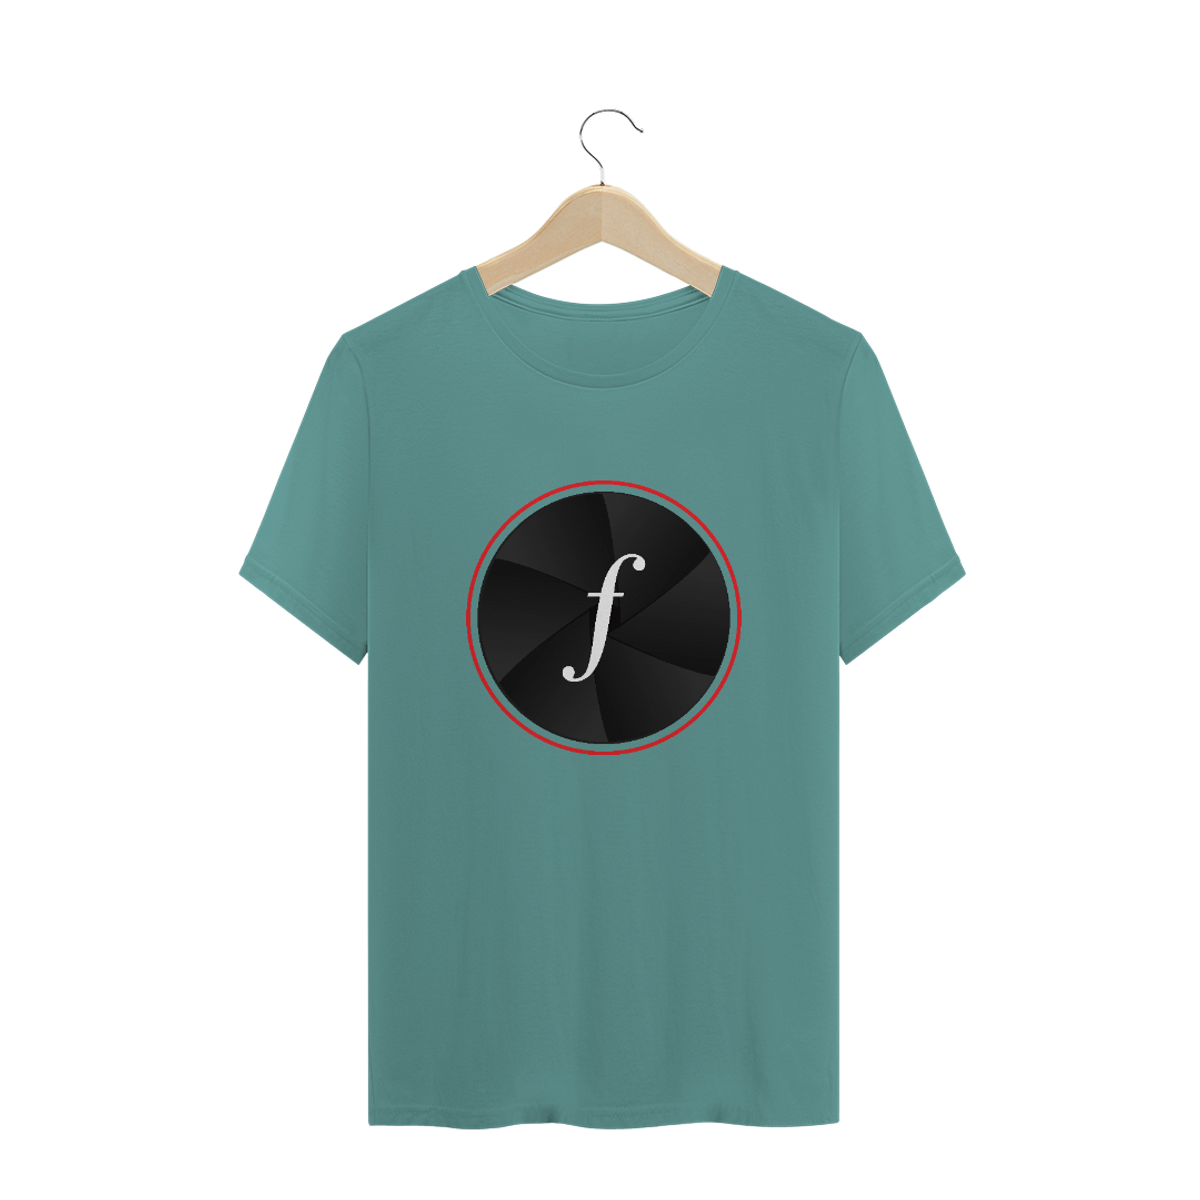 Nome do produto: Camiseta estonada - FSTOP